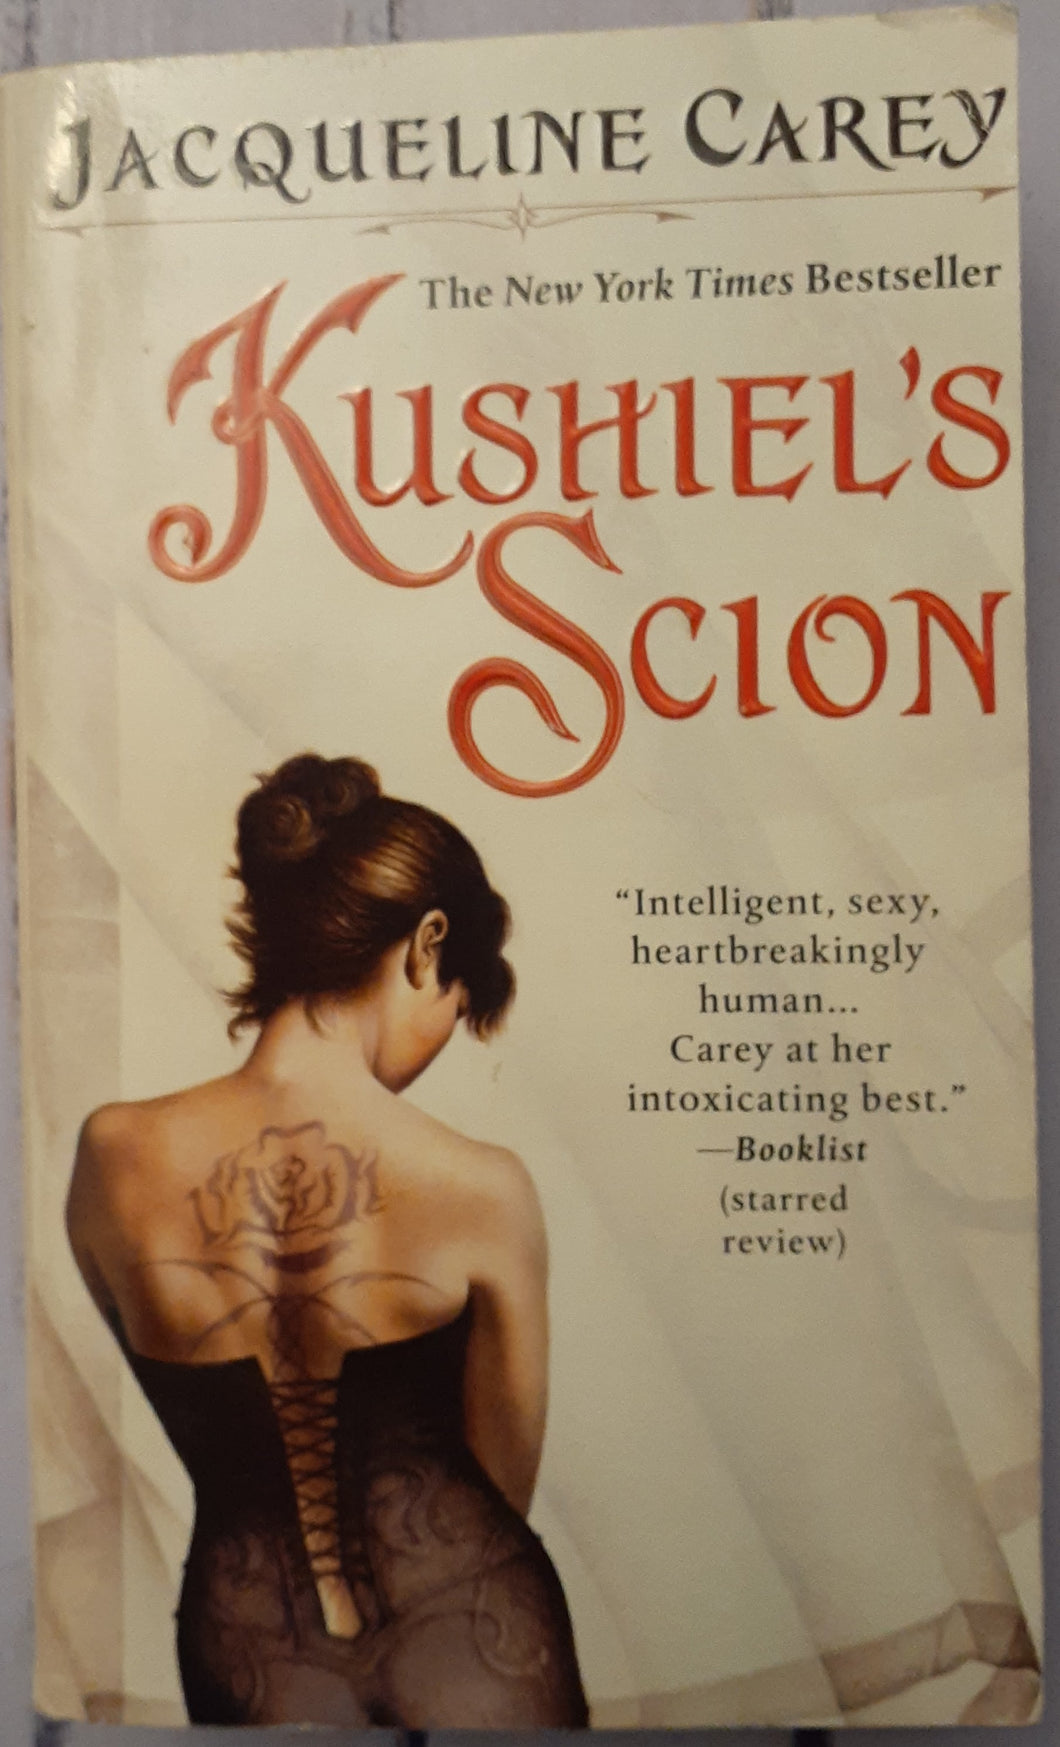 Kushiel's Scion (Imriel's Trilogy #1)